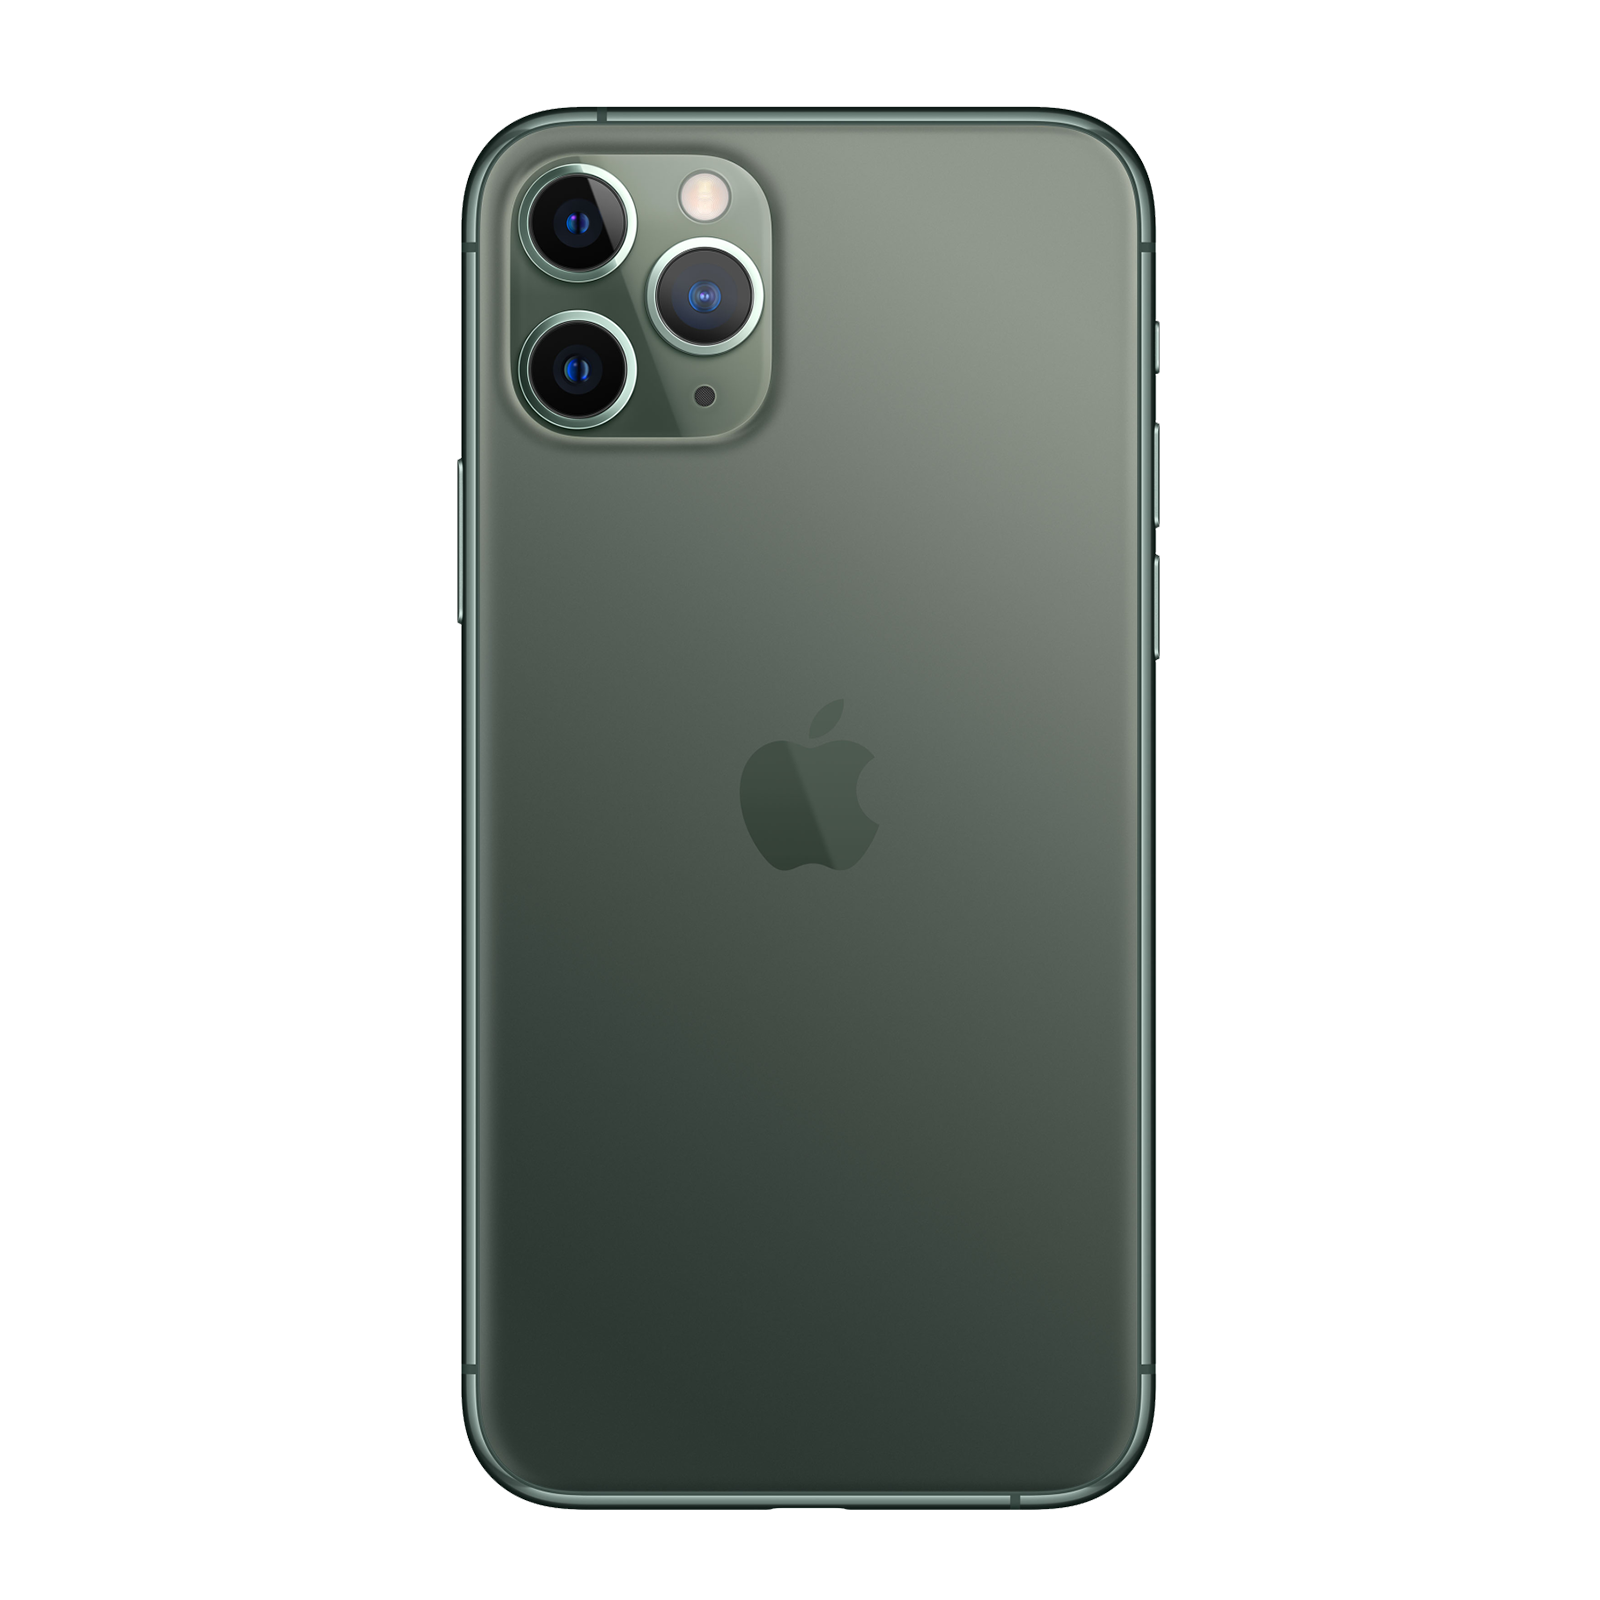 Apple iPhone 11 Pro Max 64GB Nachtgrün Makellos Ohne Vertrag mit Apple iPhone 11 Pro Max Silikonhülle – Grapefruit